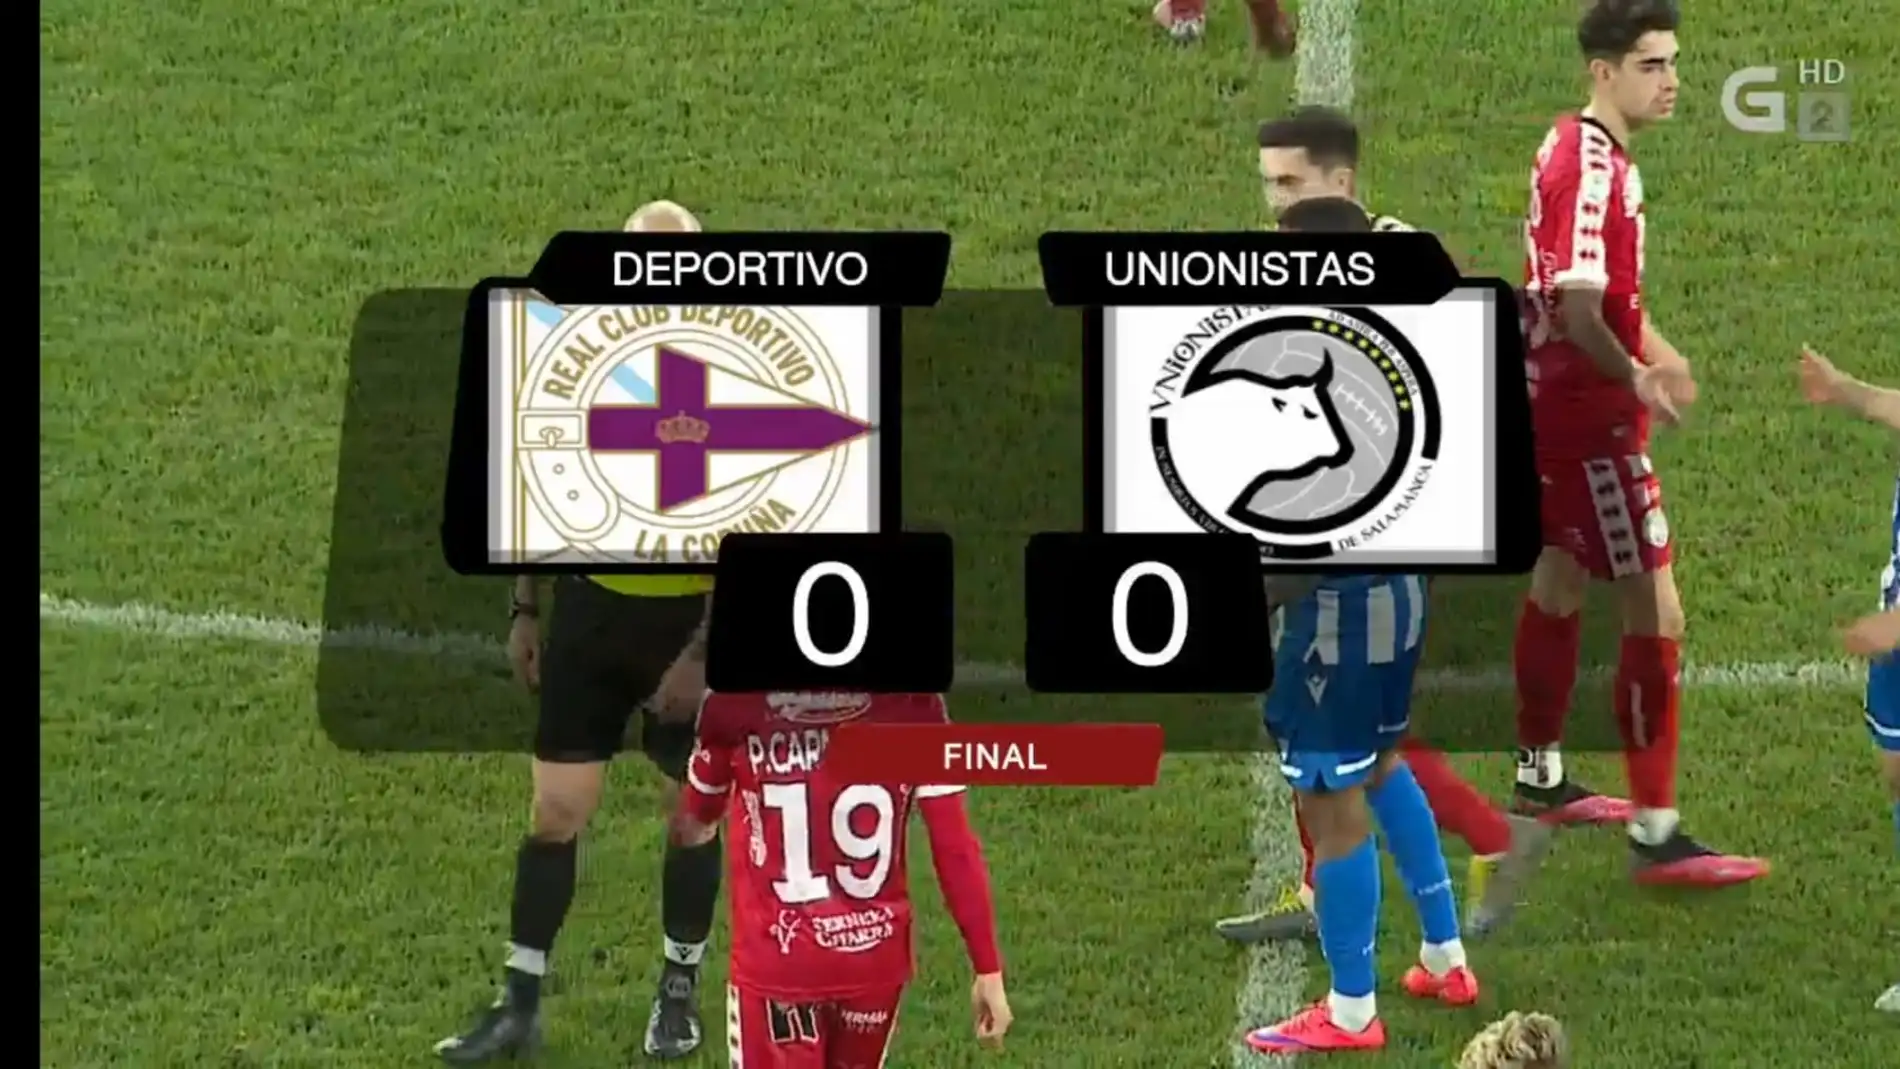 Audiencia TVG2 Deportivo 0-Unionistas 0